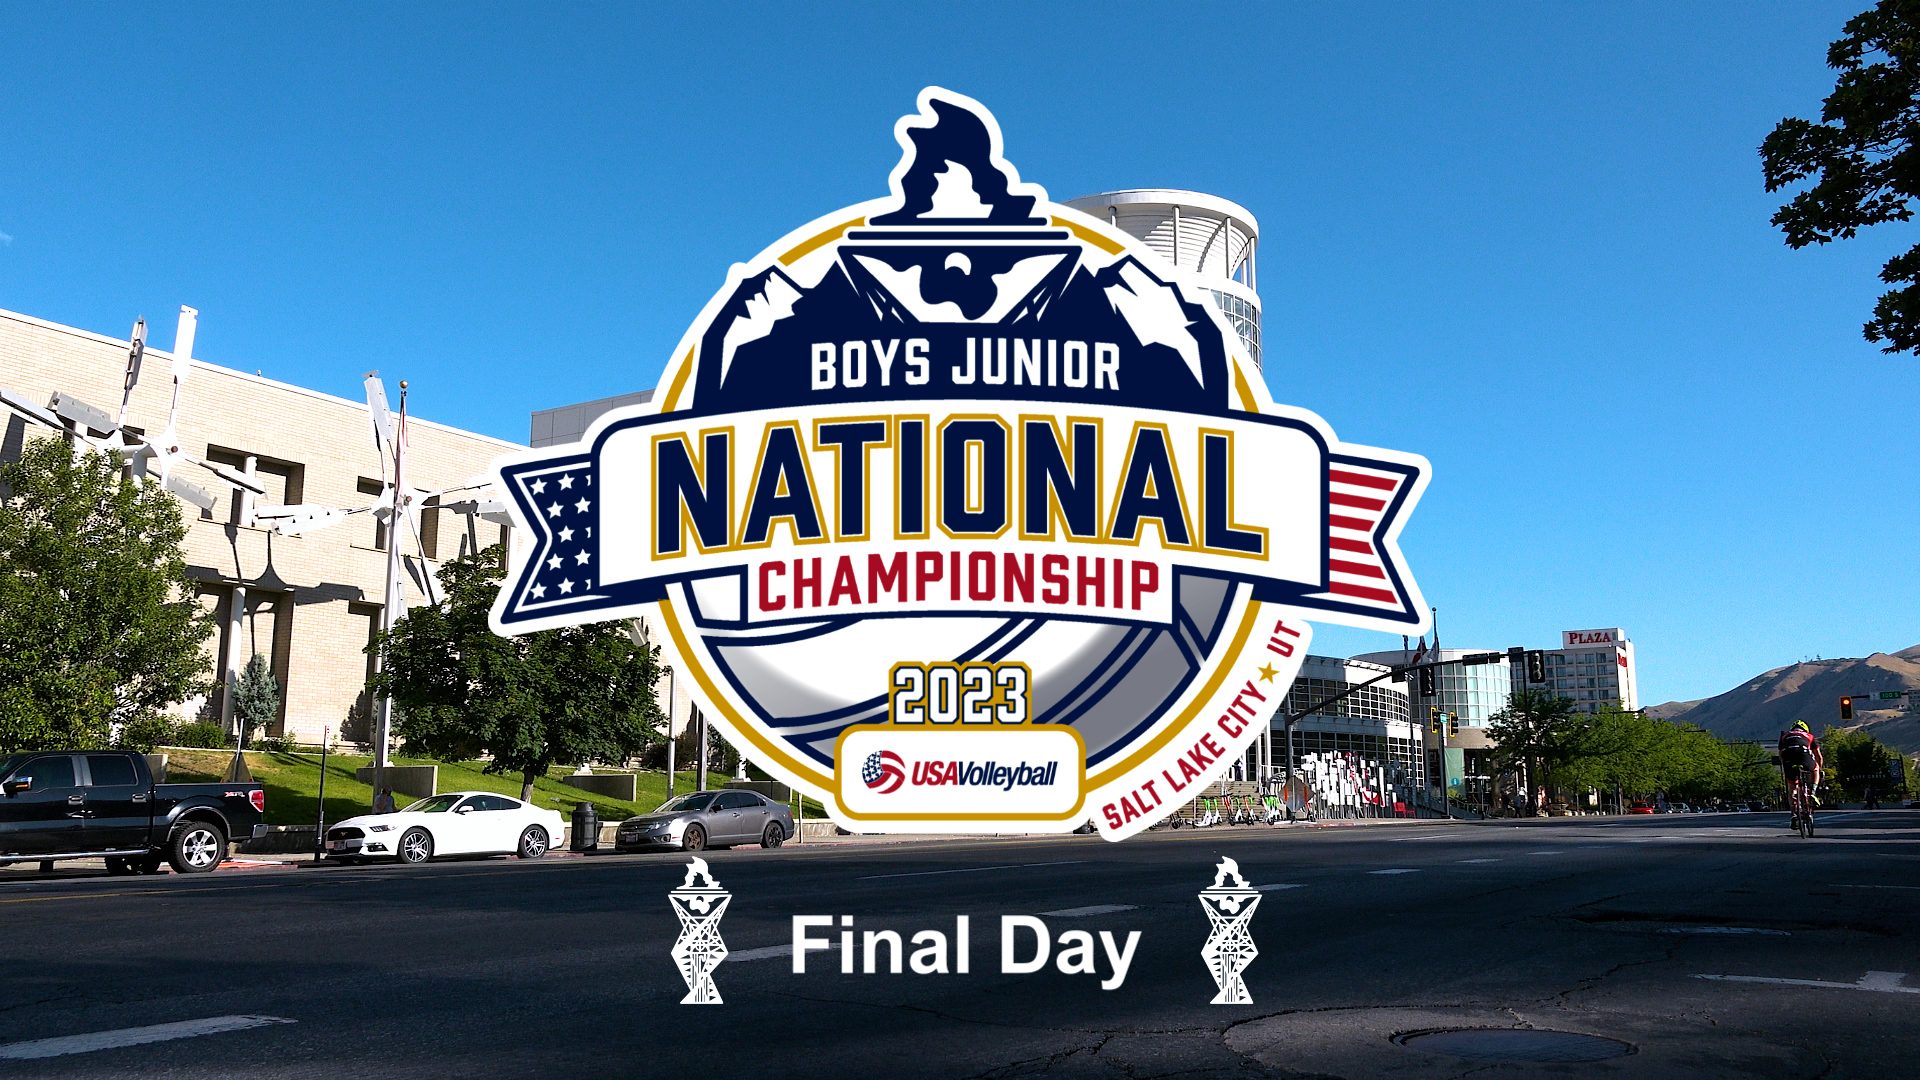 2023 USA Volleyball Boys Junior National Championship Final Day